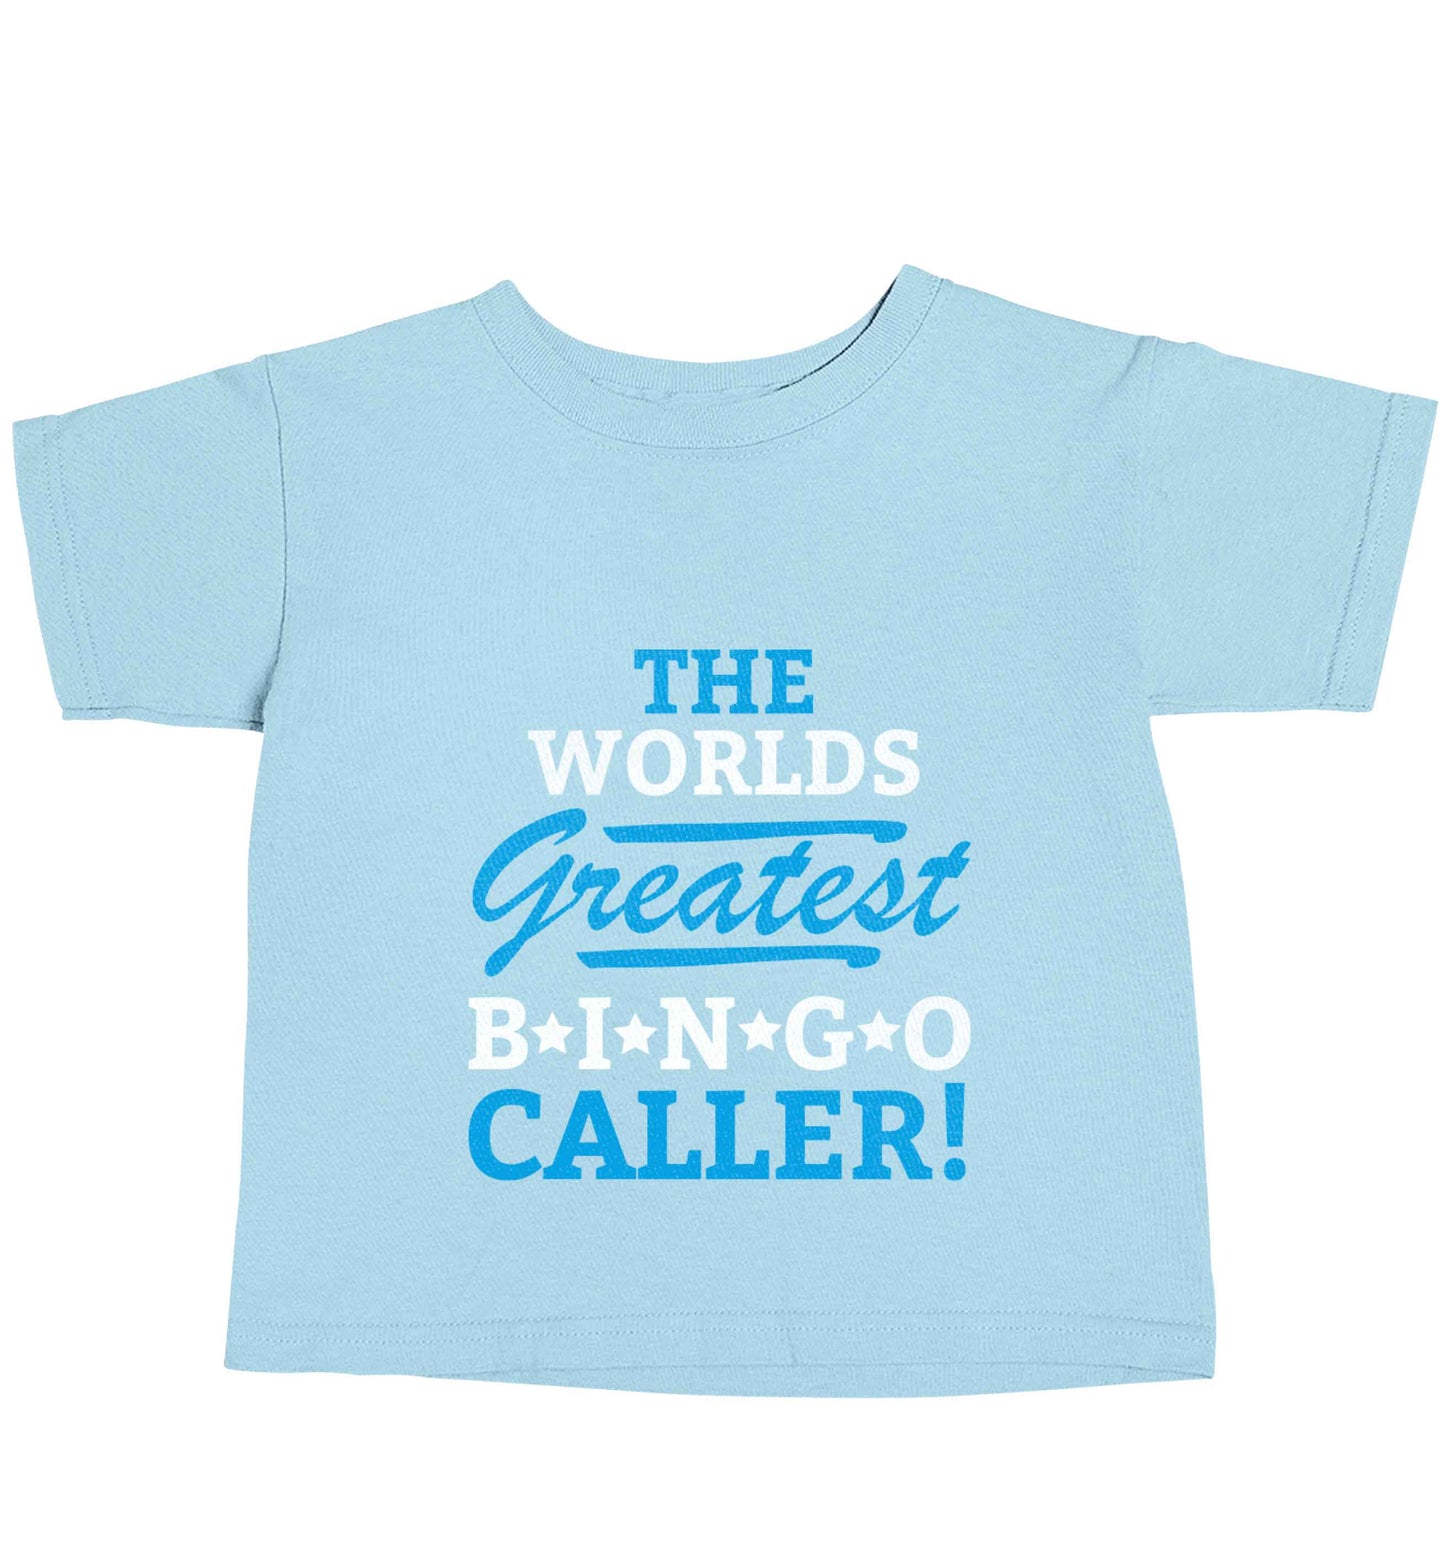 Worlds greatest bingo caller light blue baby toddler Tshirt 2 Years